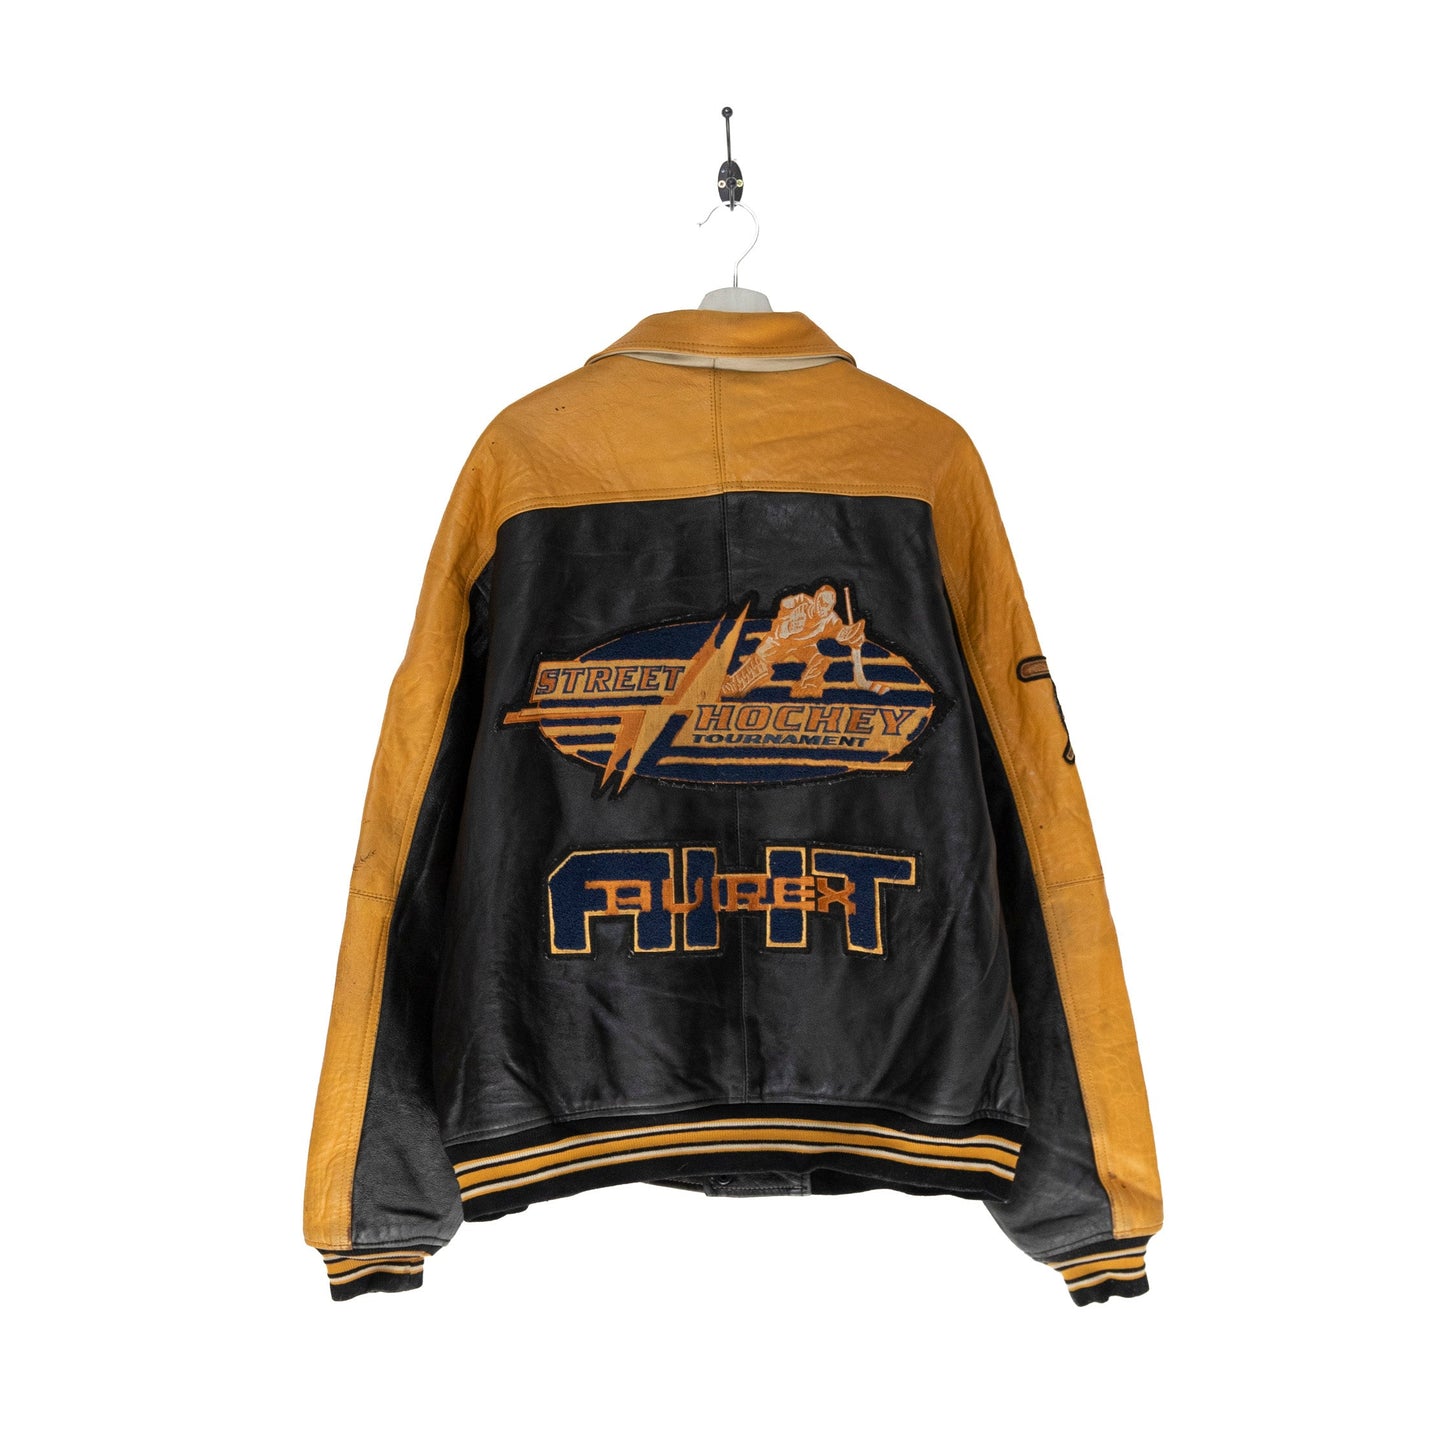 90S Avirex USA Vintage Leather Jacket